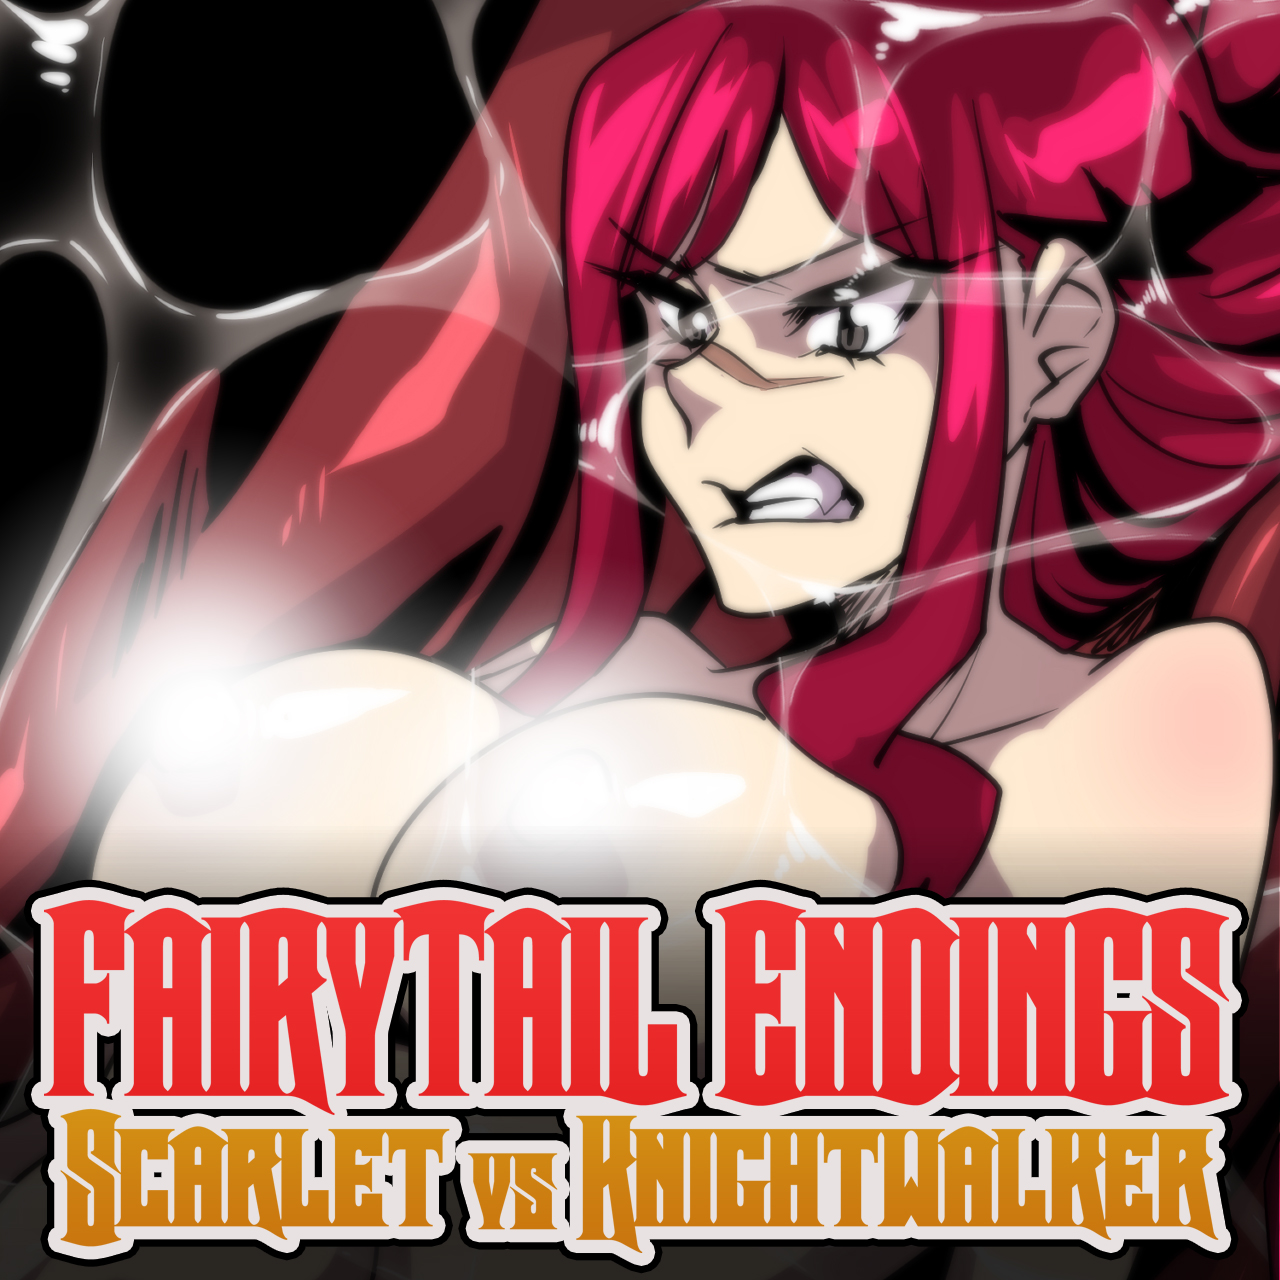 Fairy Tail Endings: Scarlet vs. Knightwalker